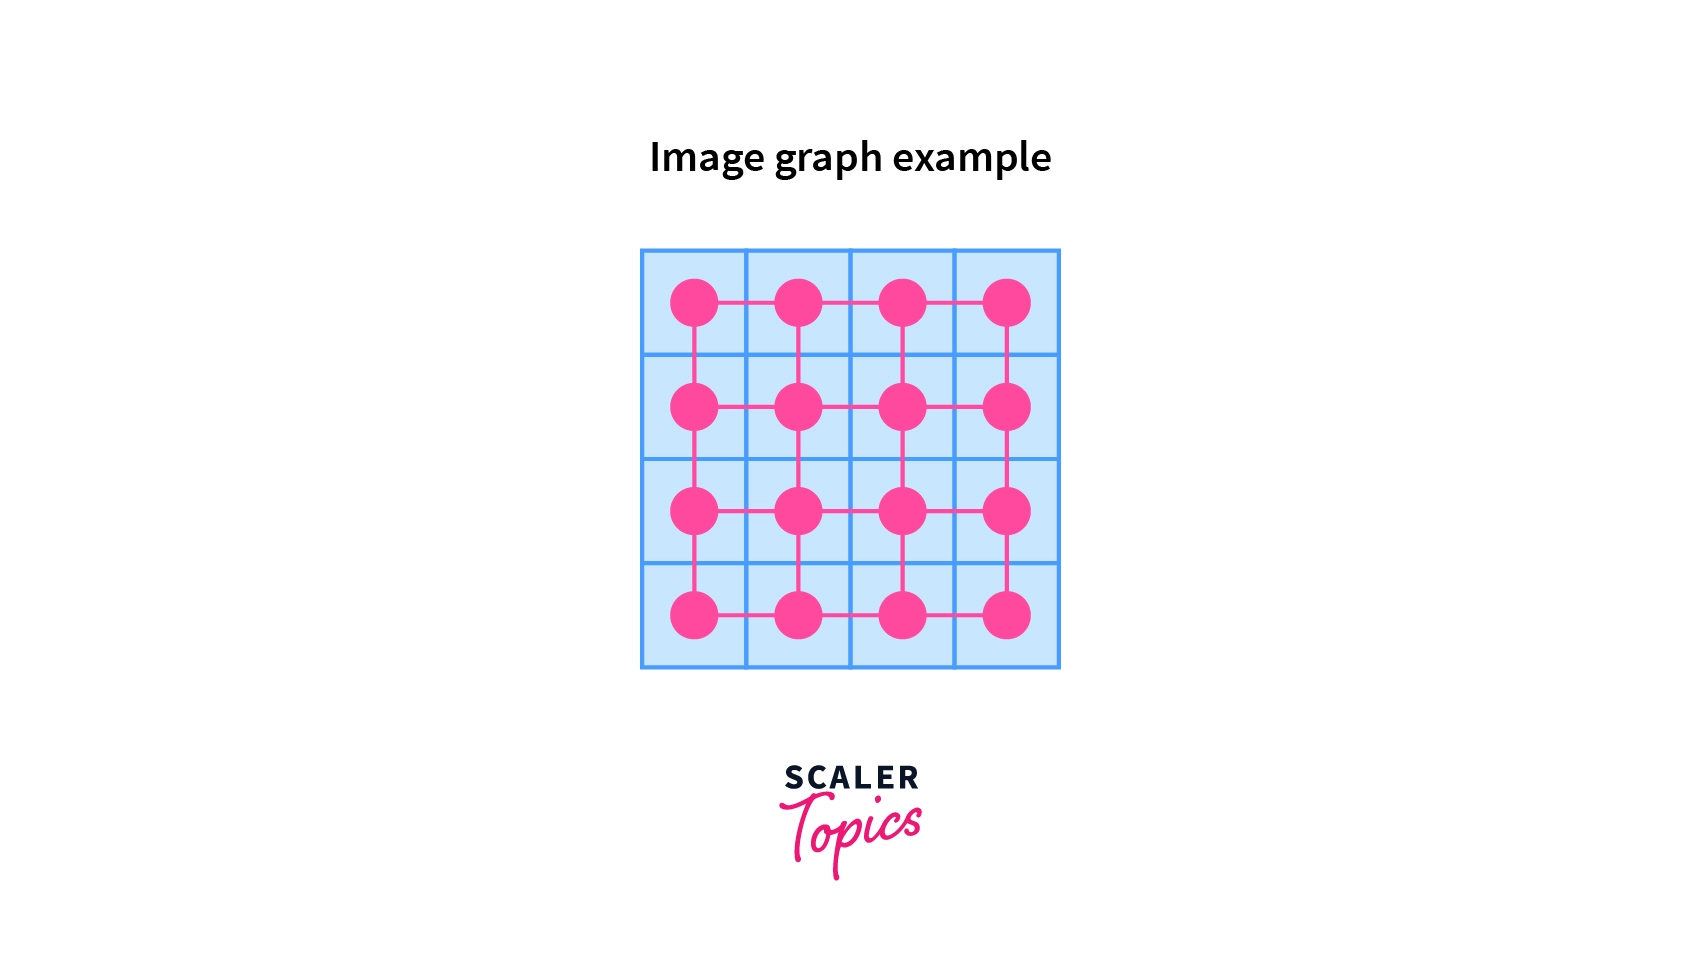 image segmentation problem